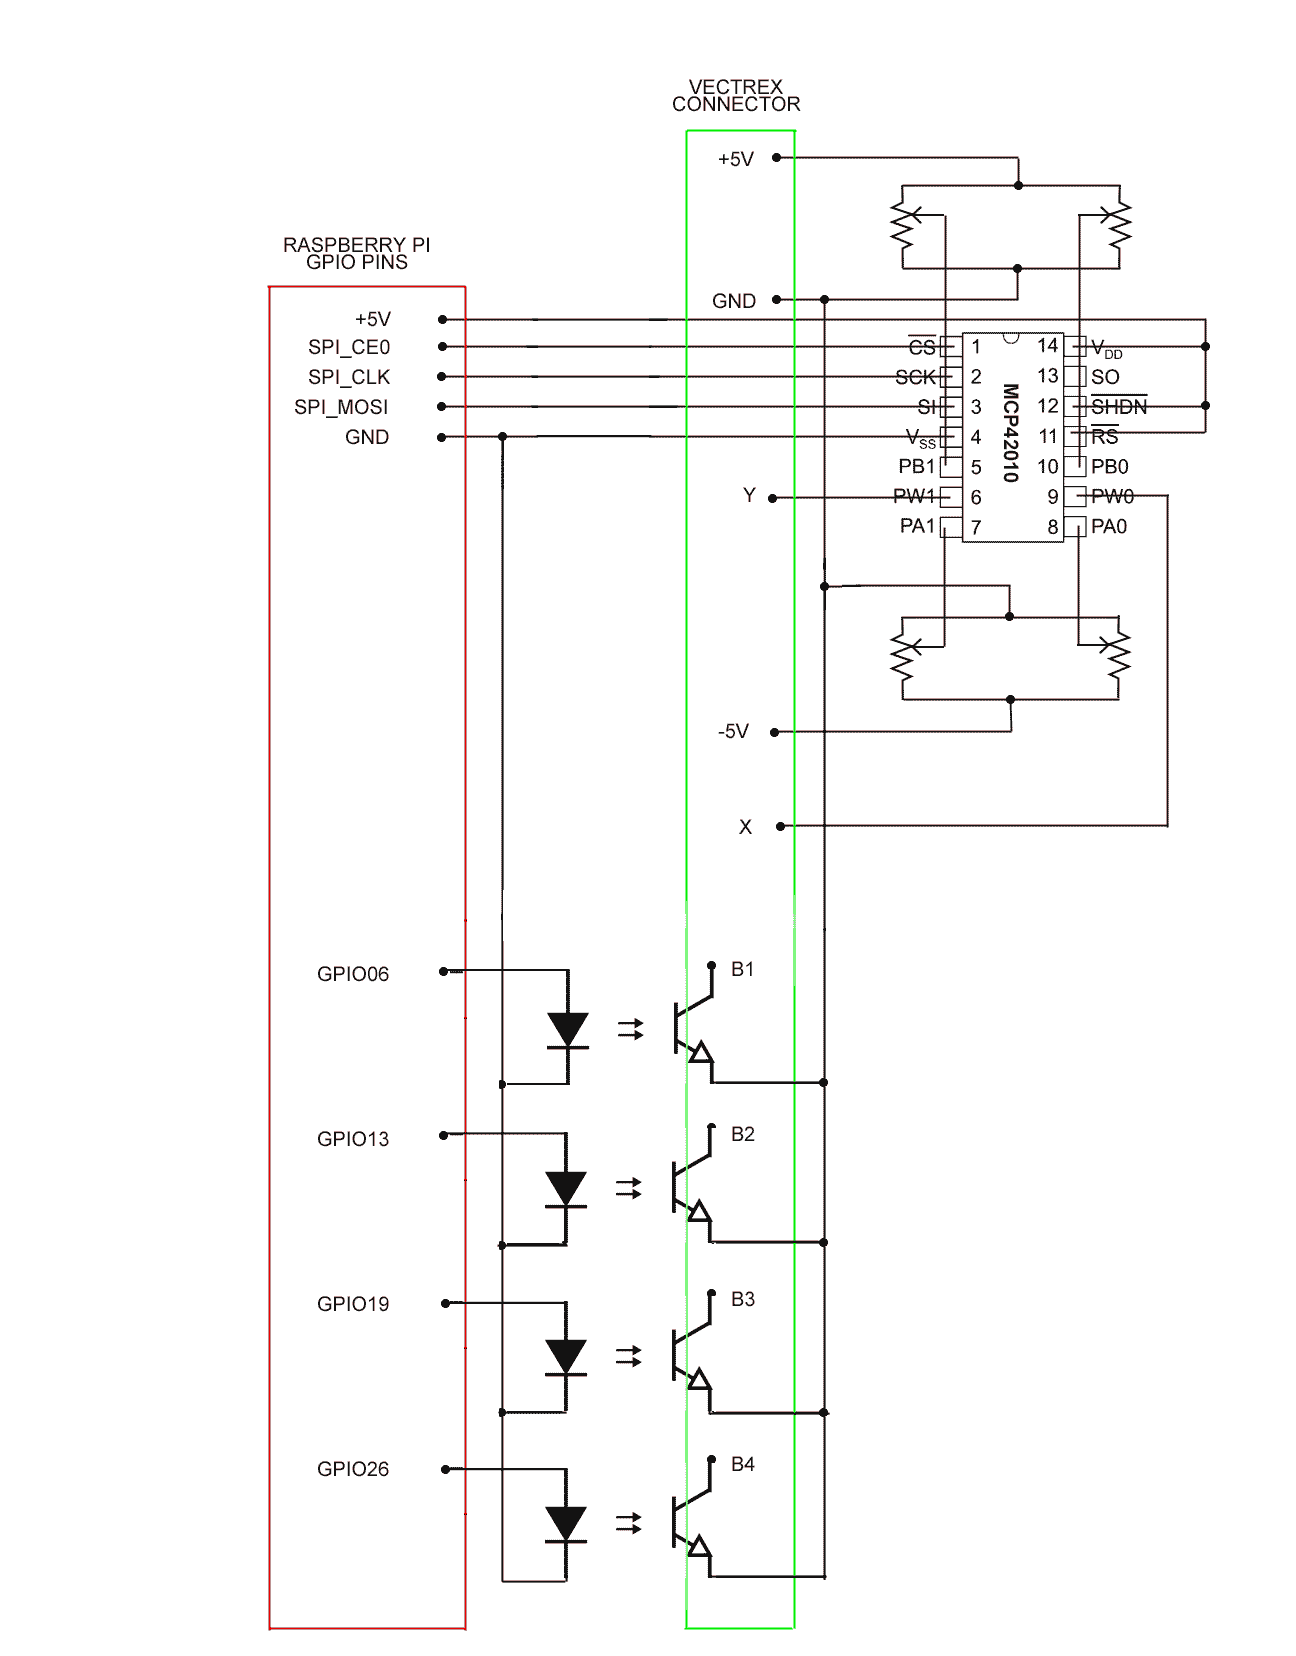 USB to Vectrex adapter circuit diagram